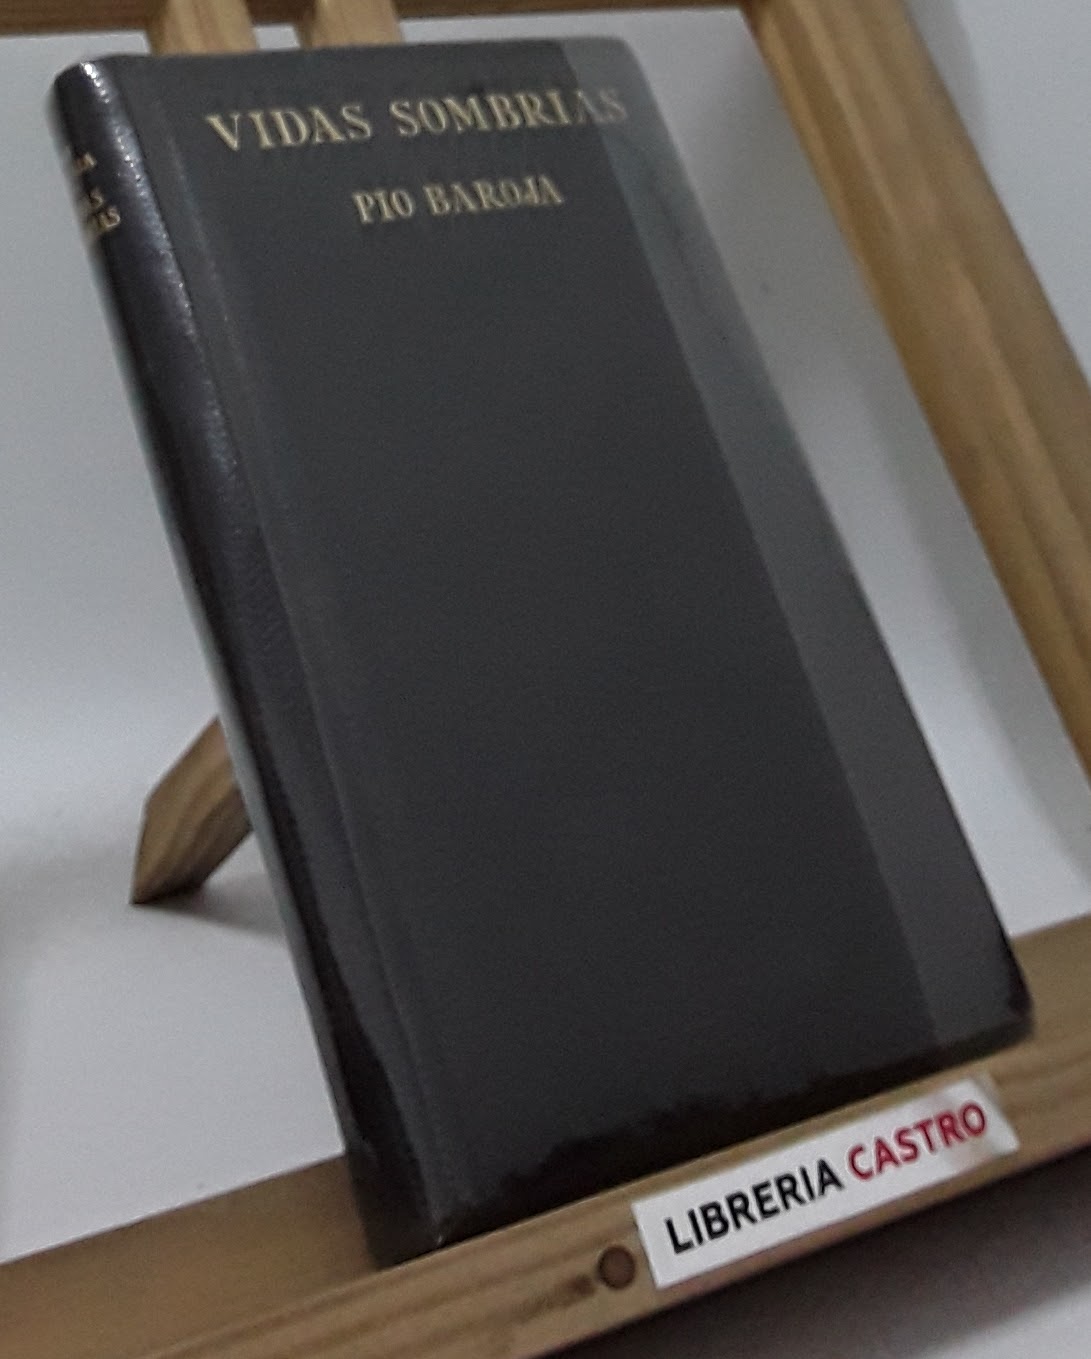 Vidas sombrías by Pío Baroja | Librería Castro